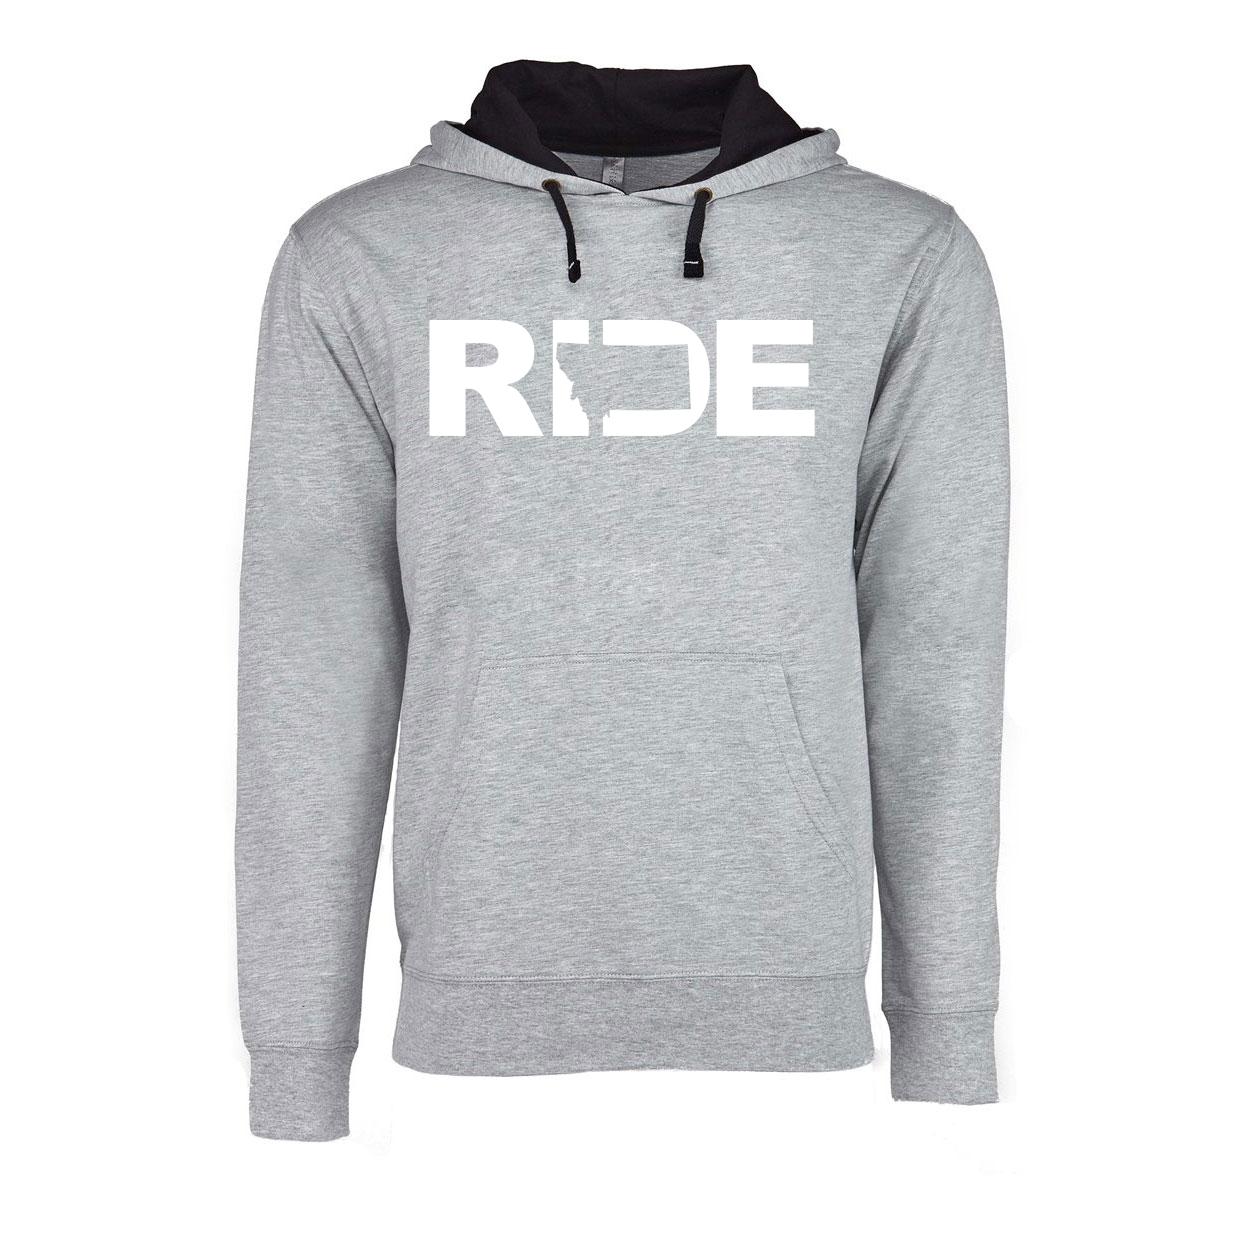 Ride Montana Classic Lightweight Sweatshirt Heather Gray/Black (White Logo)